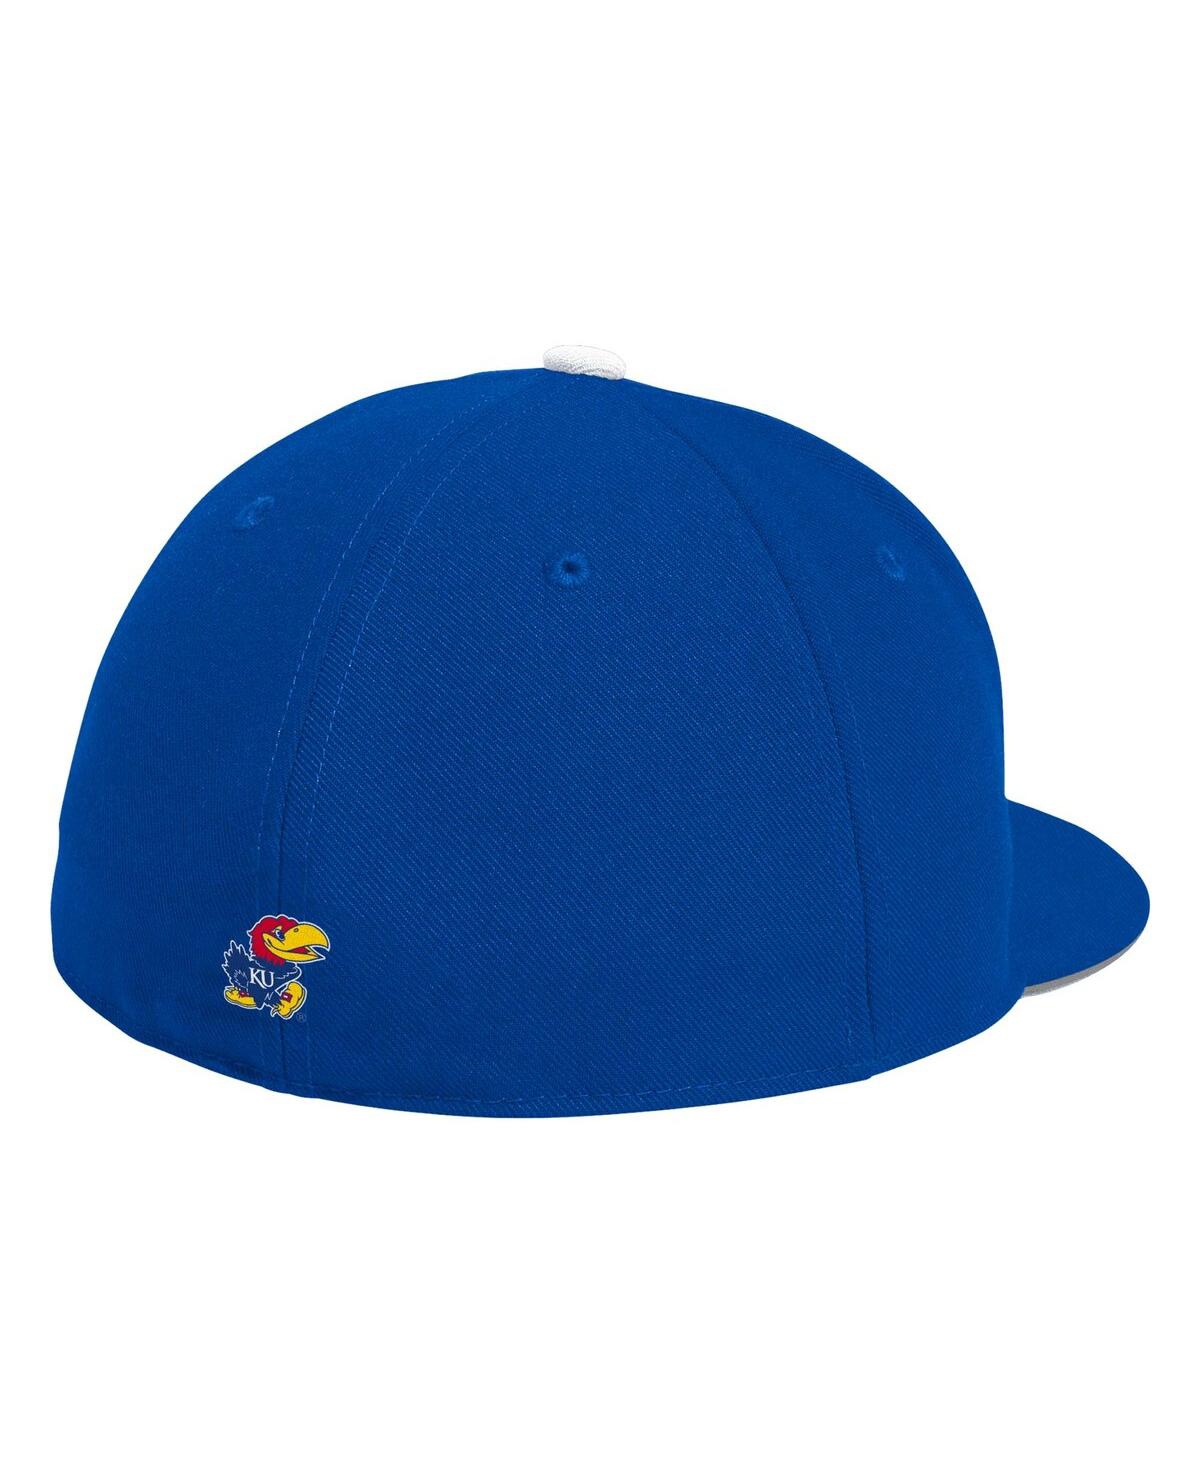 Shop Adidas Originals Men's Adidas Royal Kansas Jayhawks On-field Baseball Fitted Hat